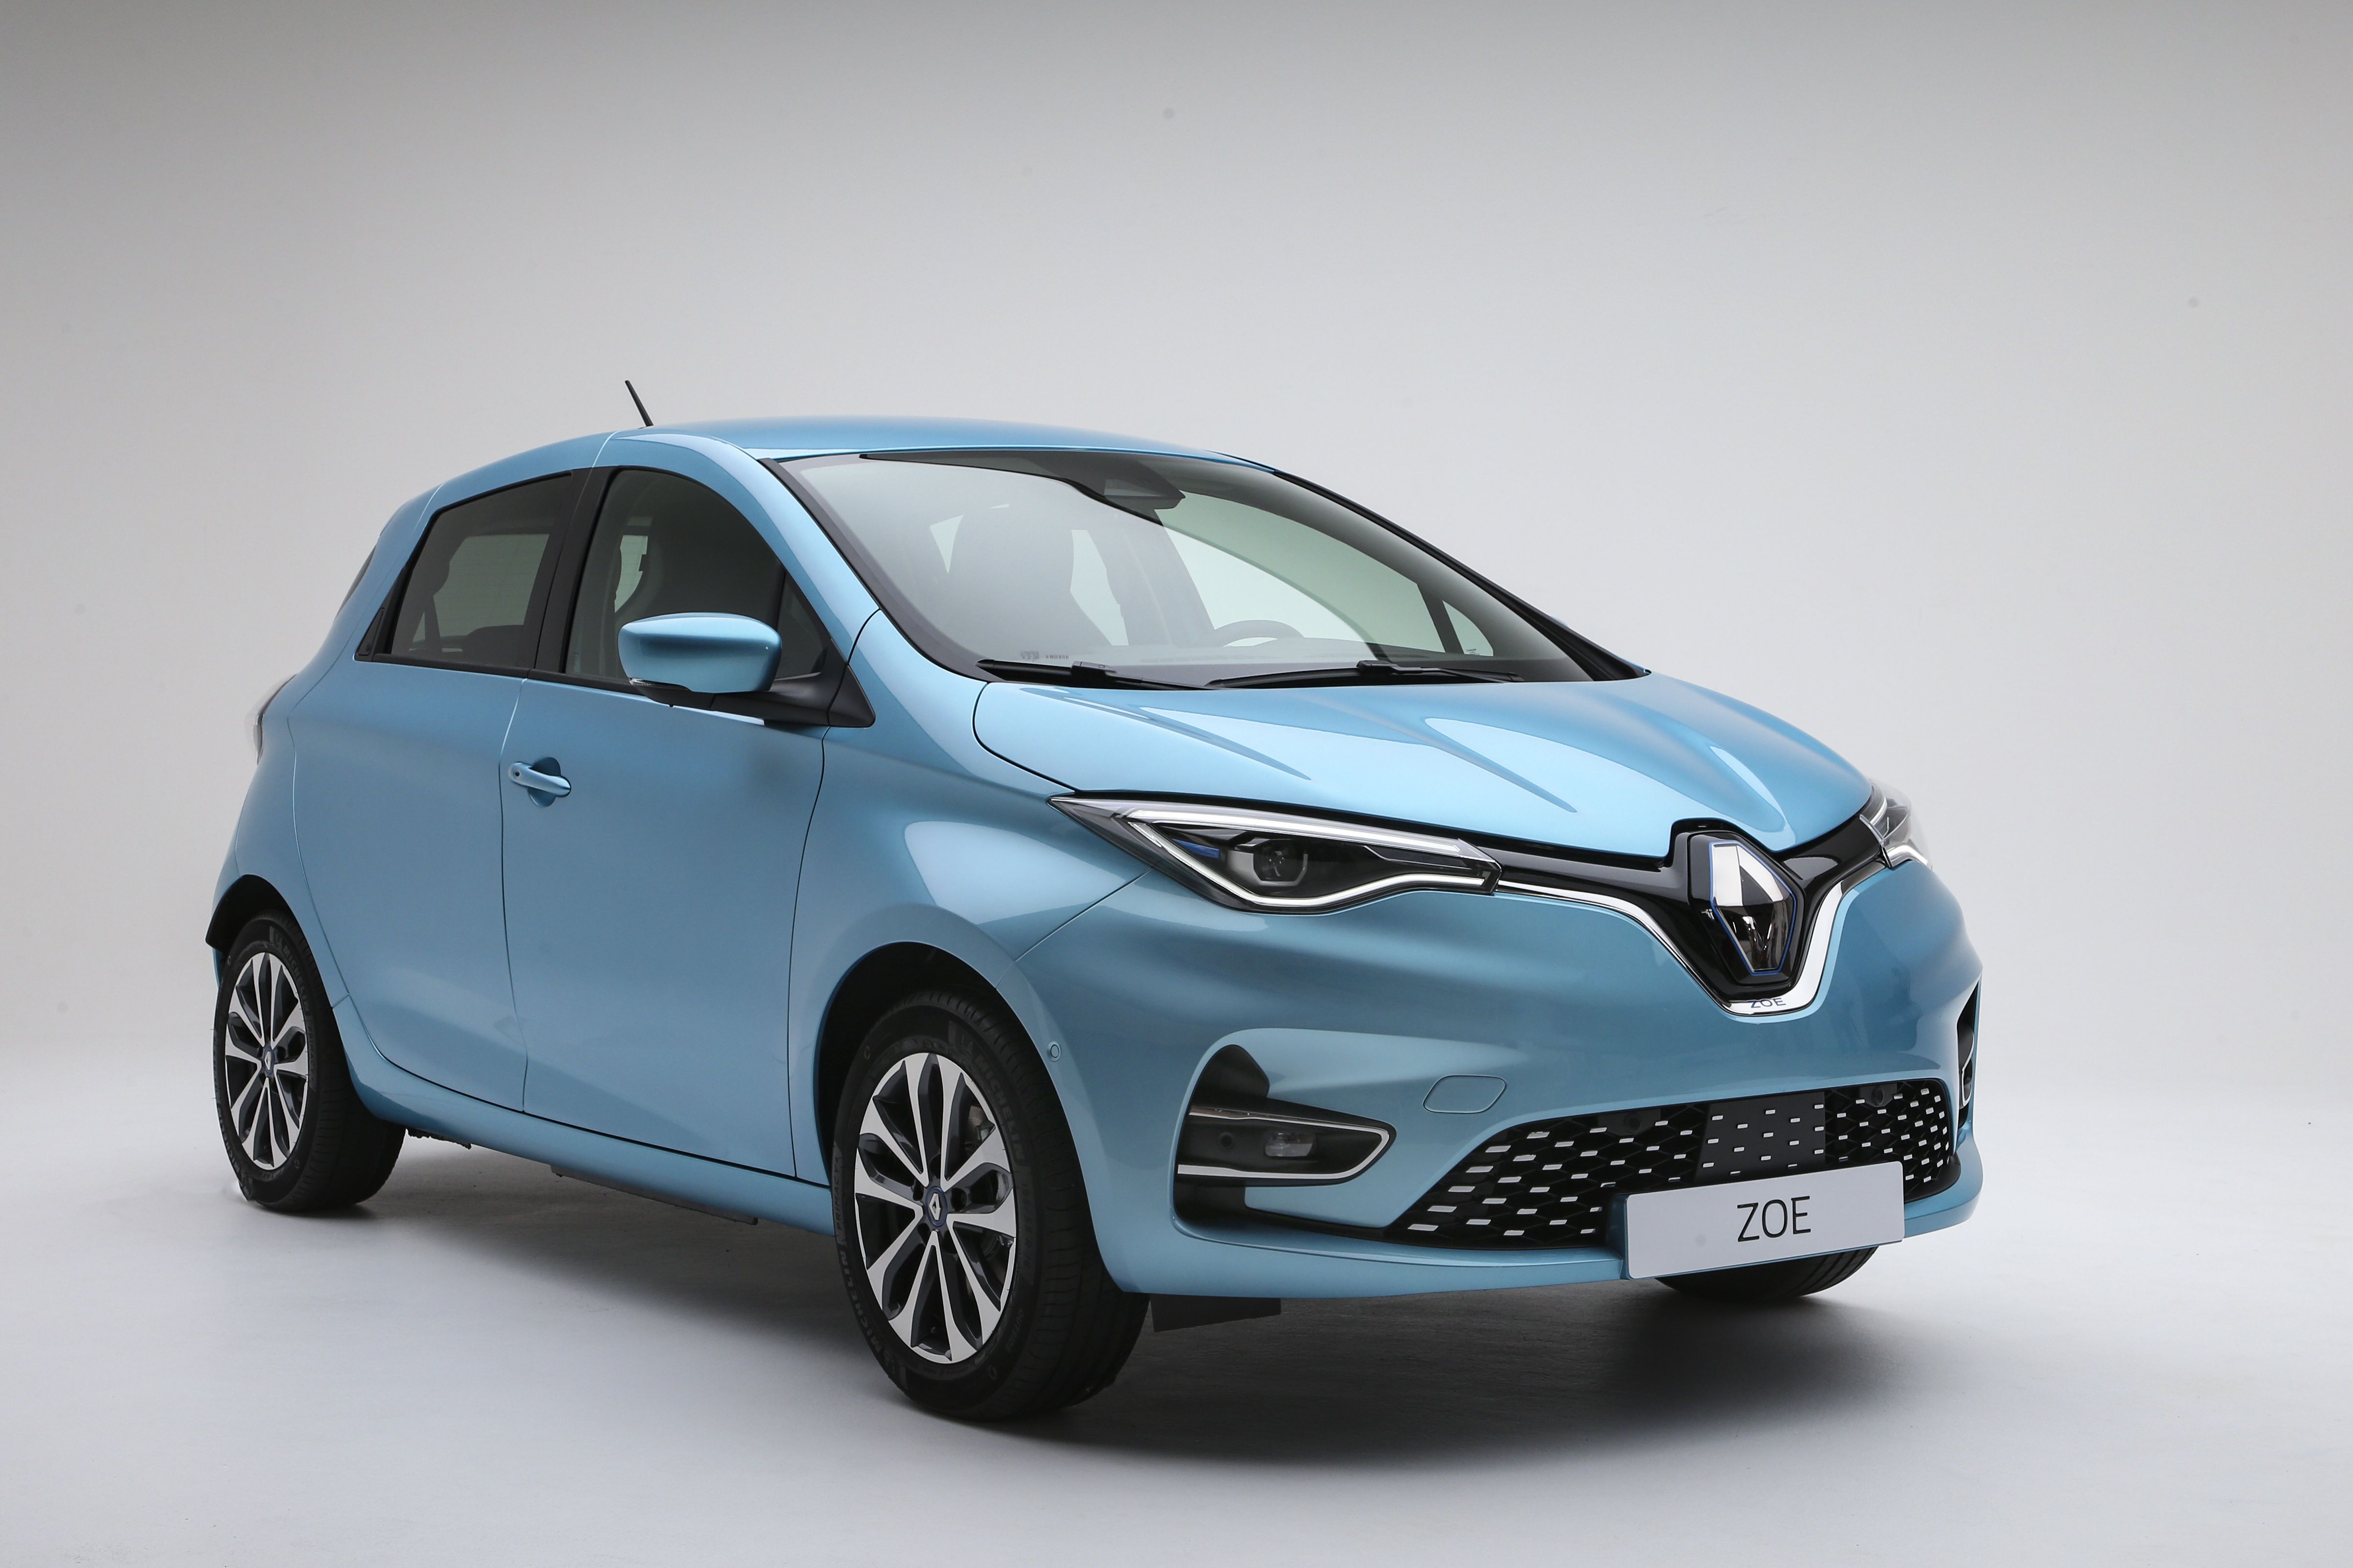 Das Elektroauto Renault Zoe kann bereits ab 99 Euro monatlich